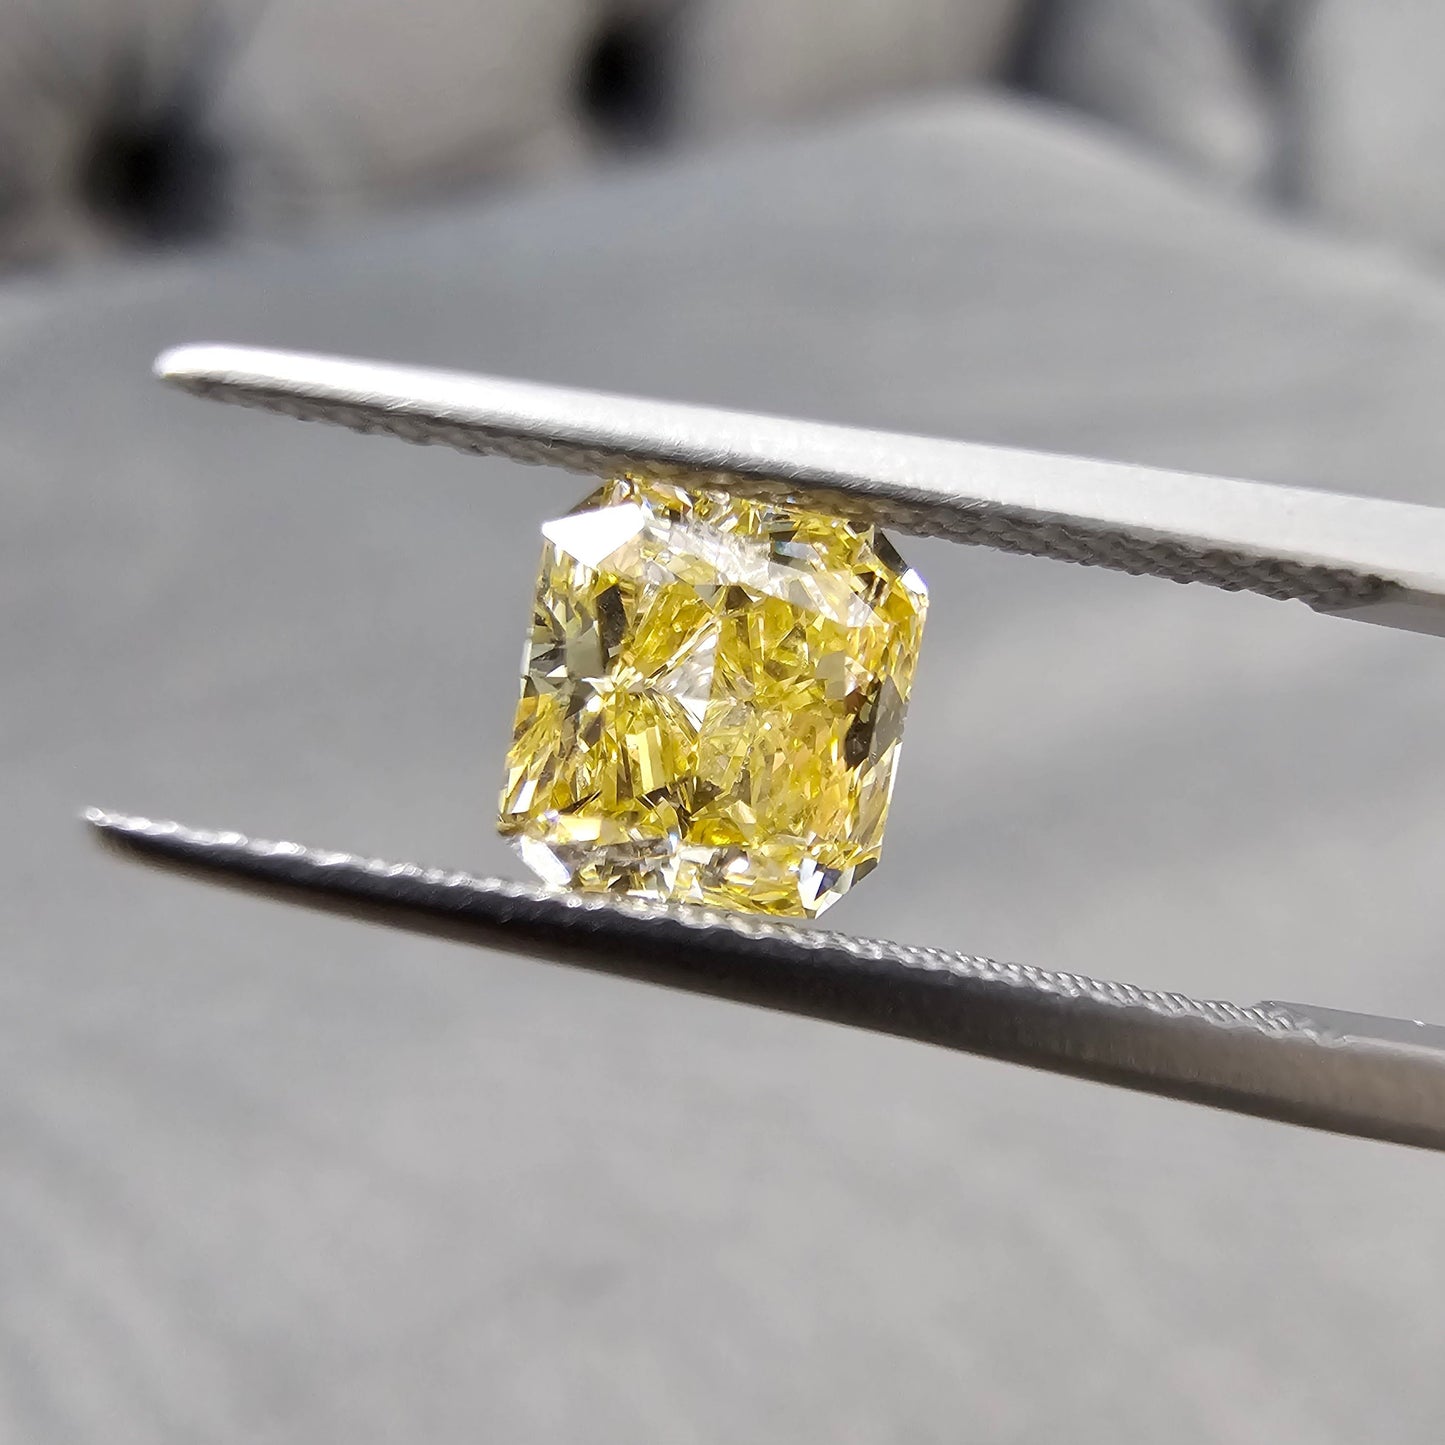 1.37 Carat  Fancy Intense Orangy Yellow Radiant Cut Diamond  SI1 Clarity  GIA Certified Diamond Very Good and Good